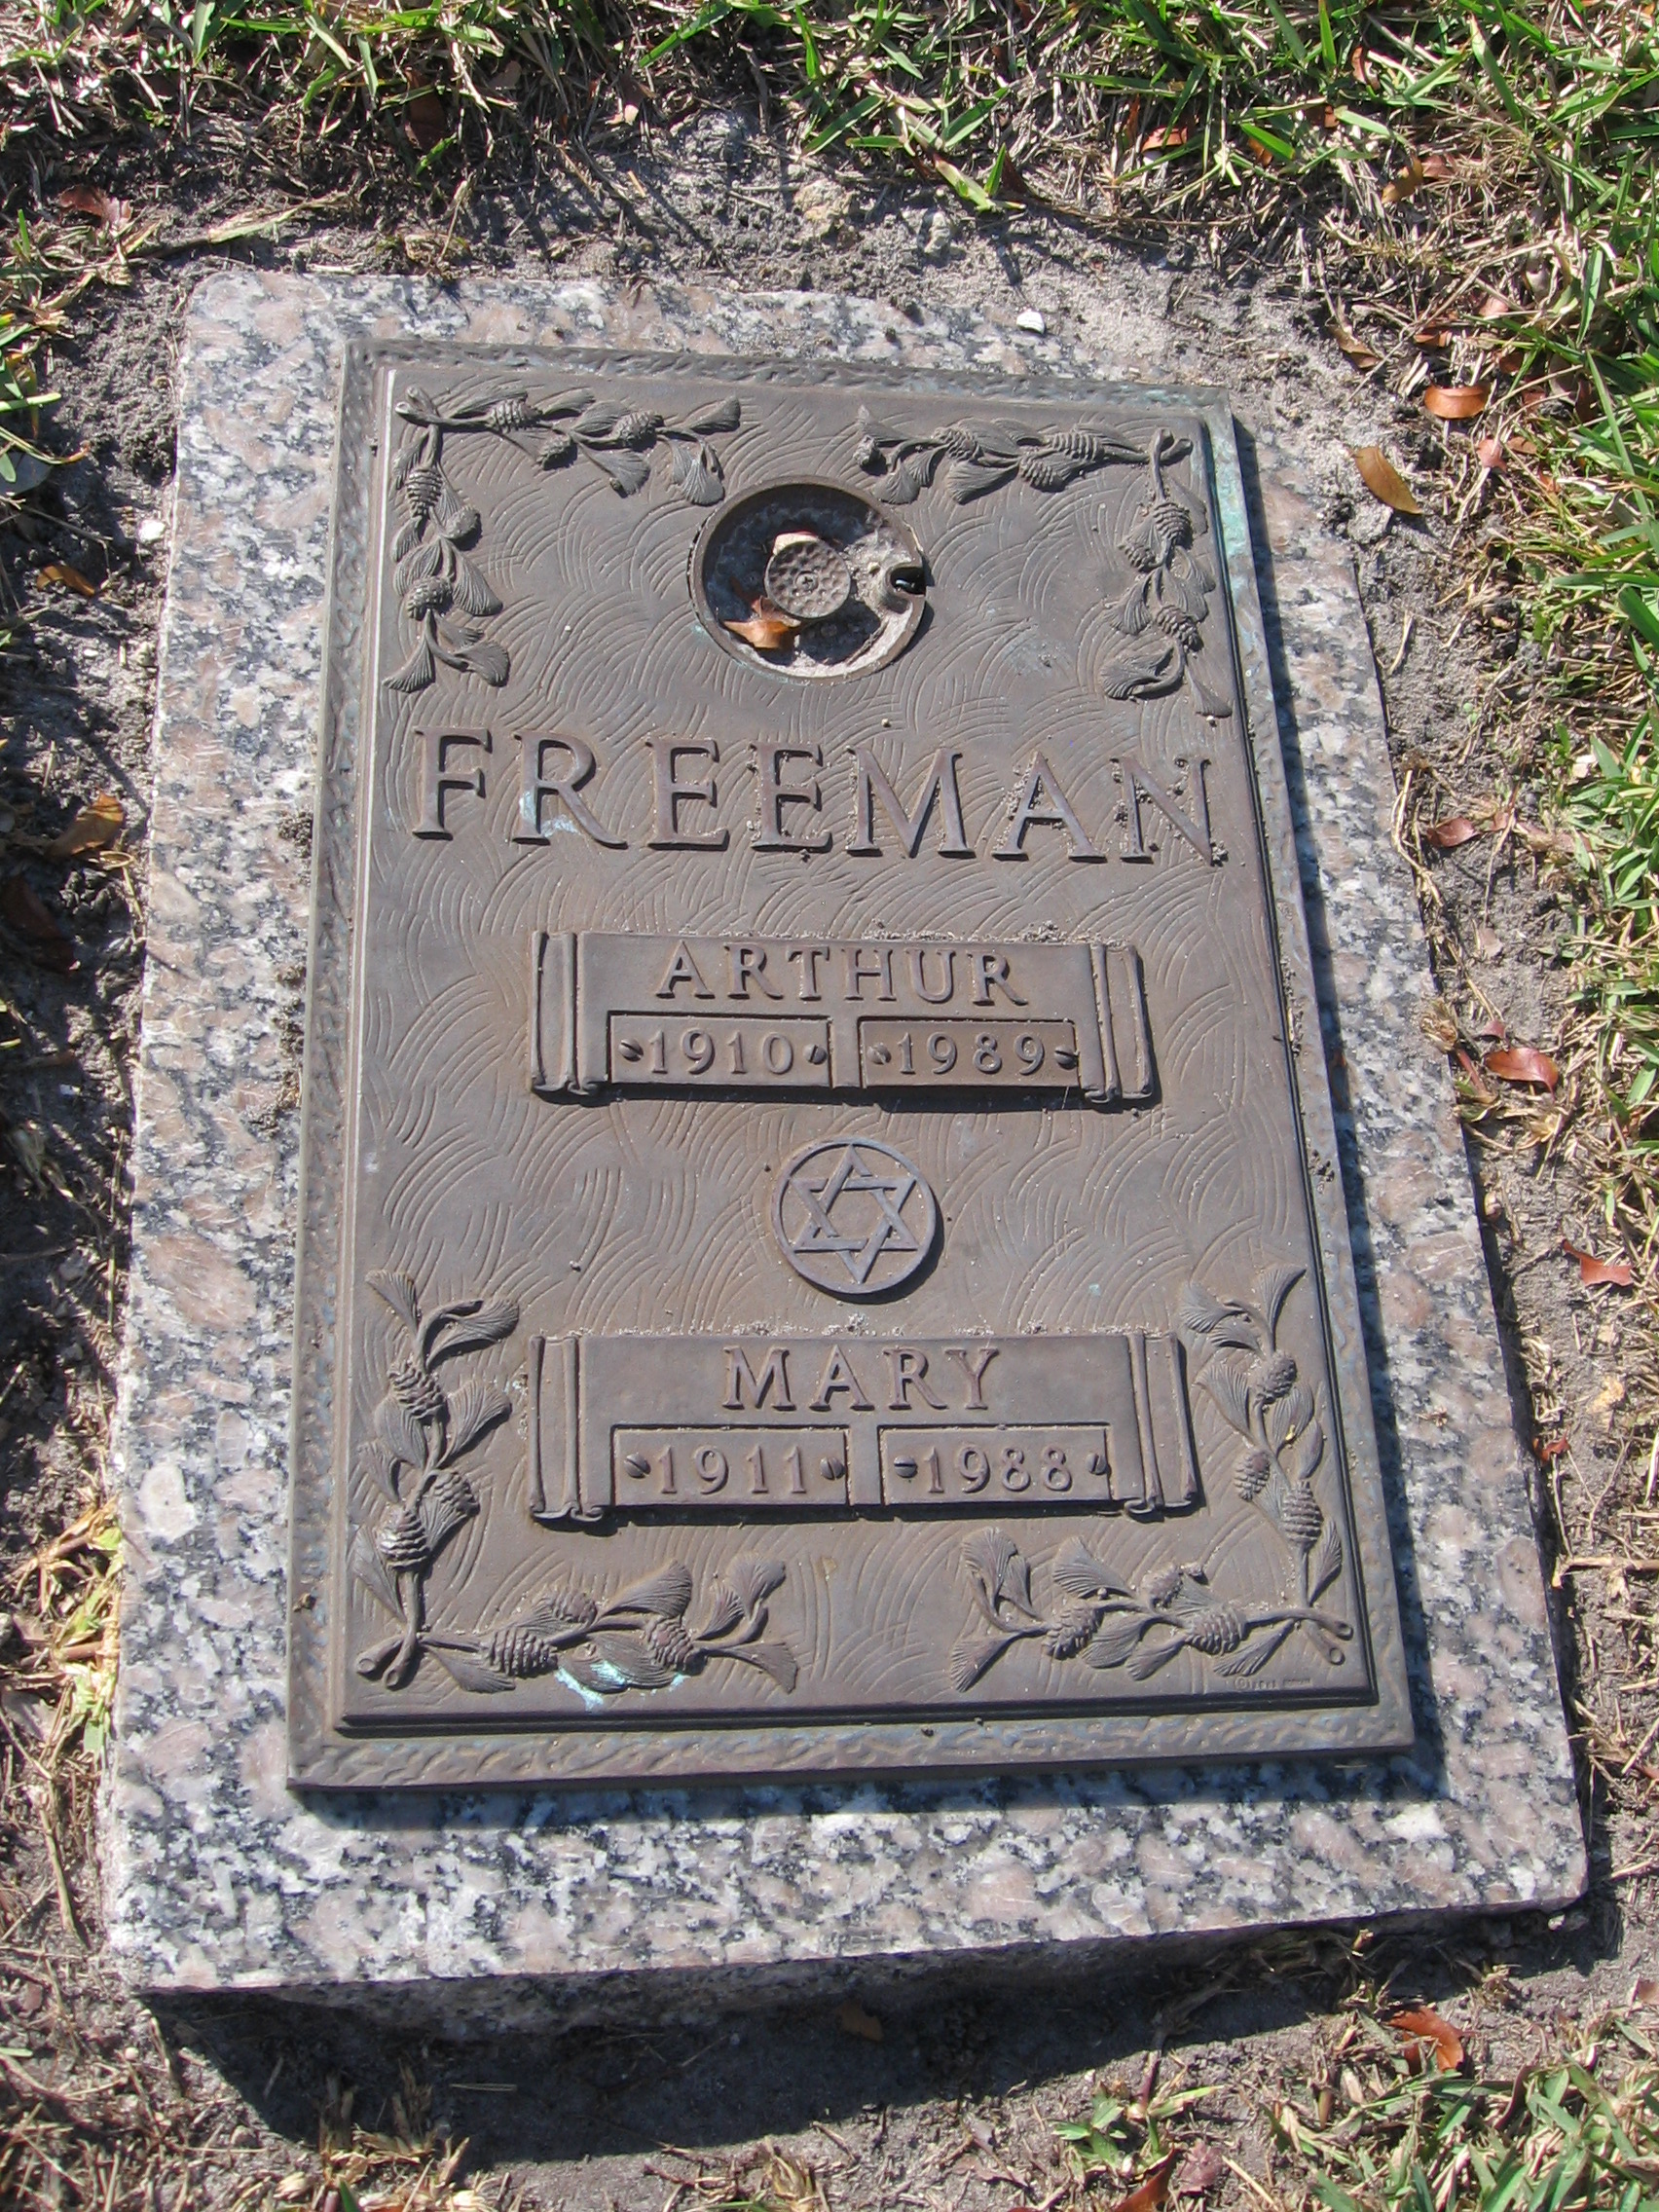 Arthur Freeman